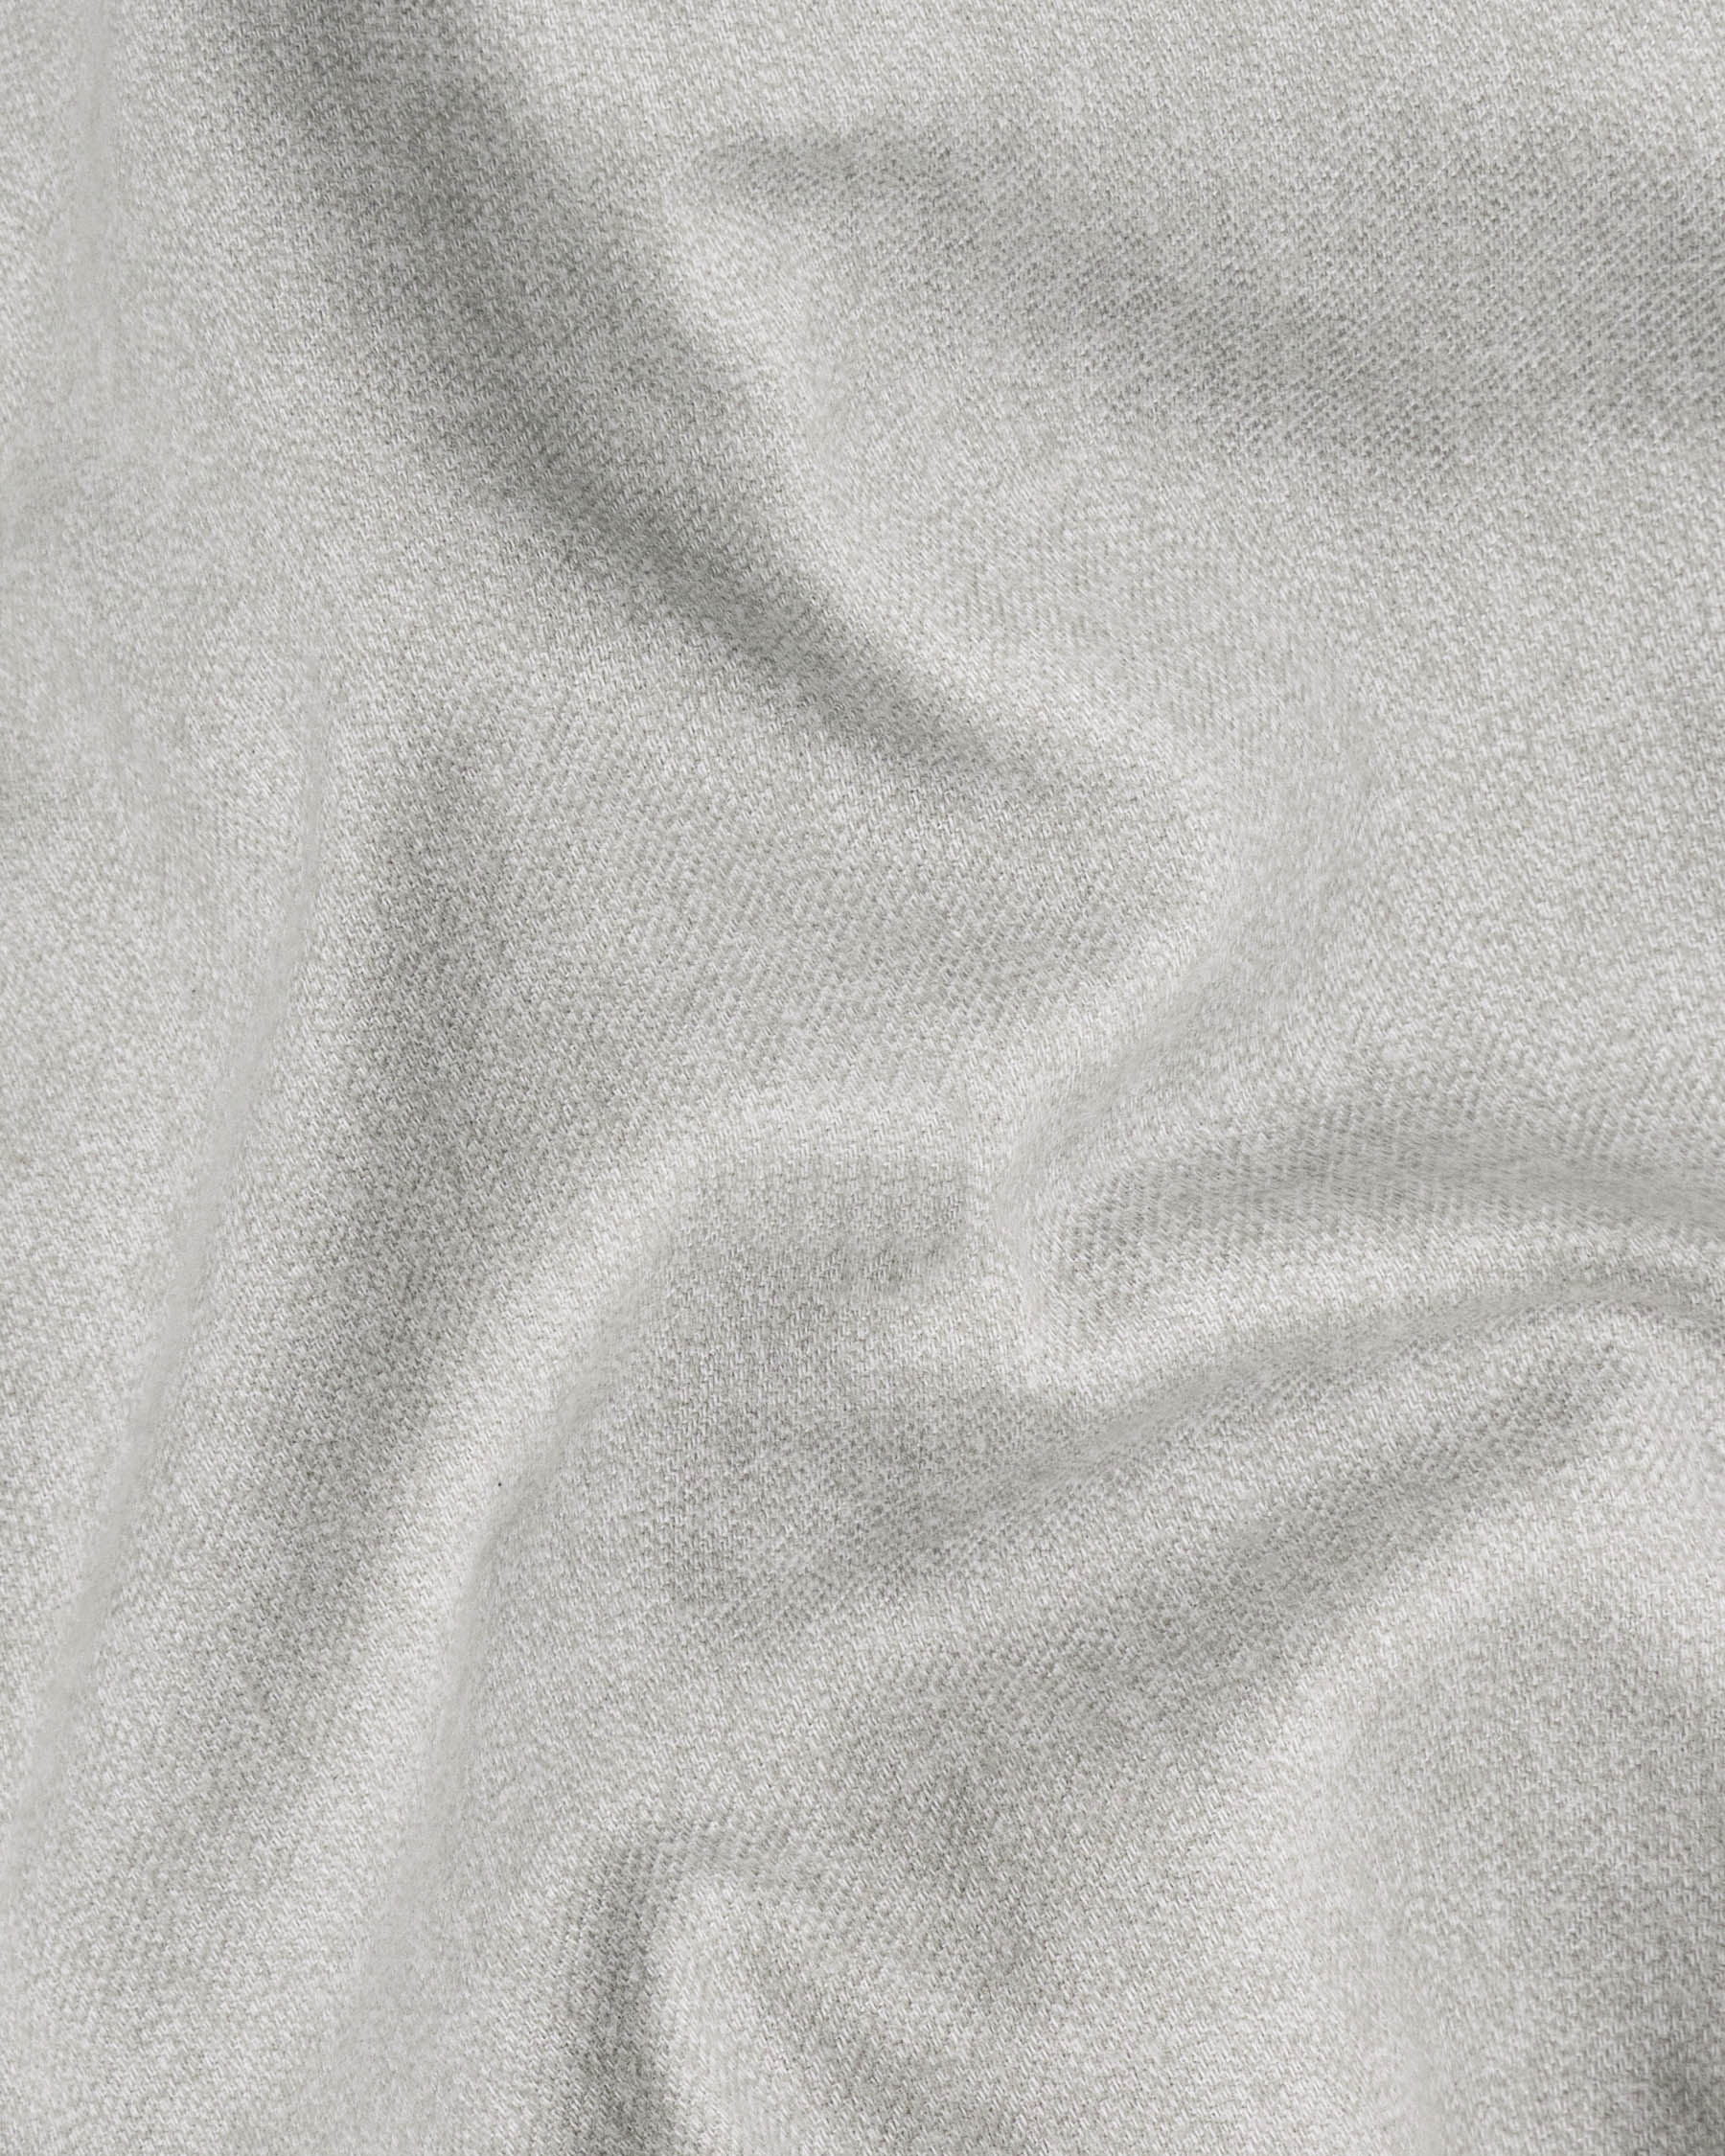 Light Grey Heavyweight Flannel Overshirt/Shacket